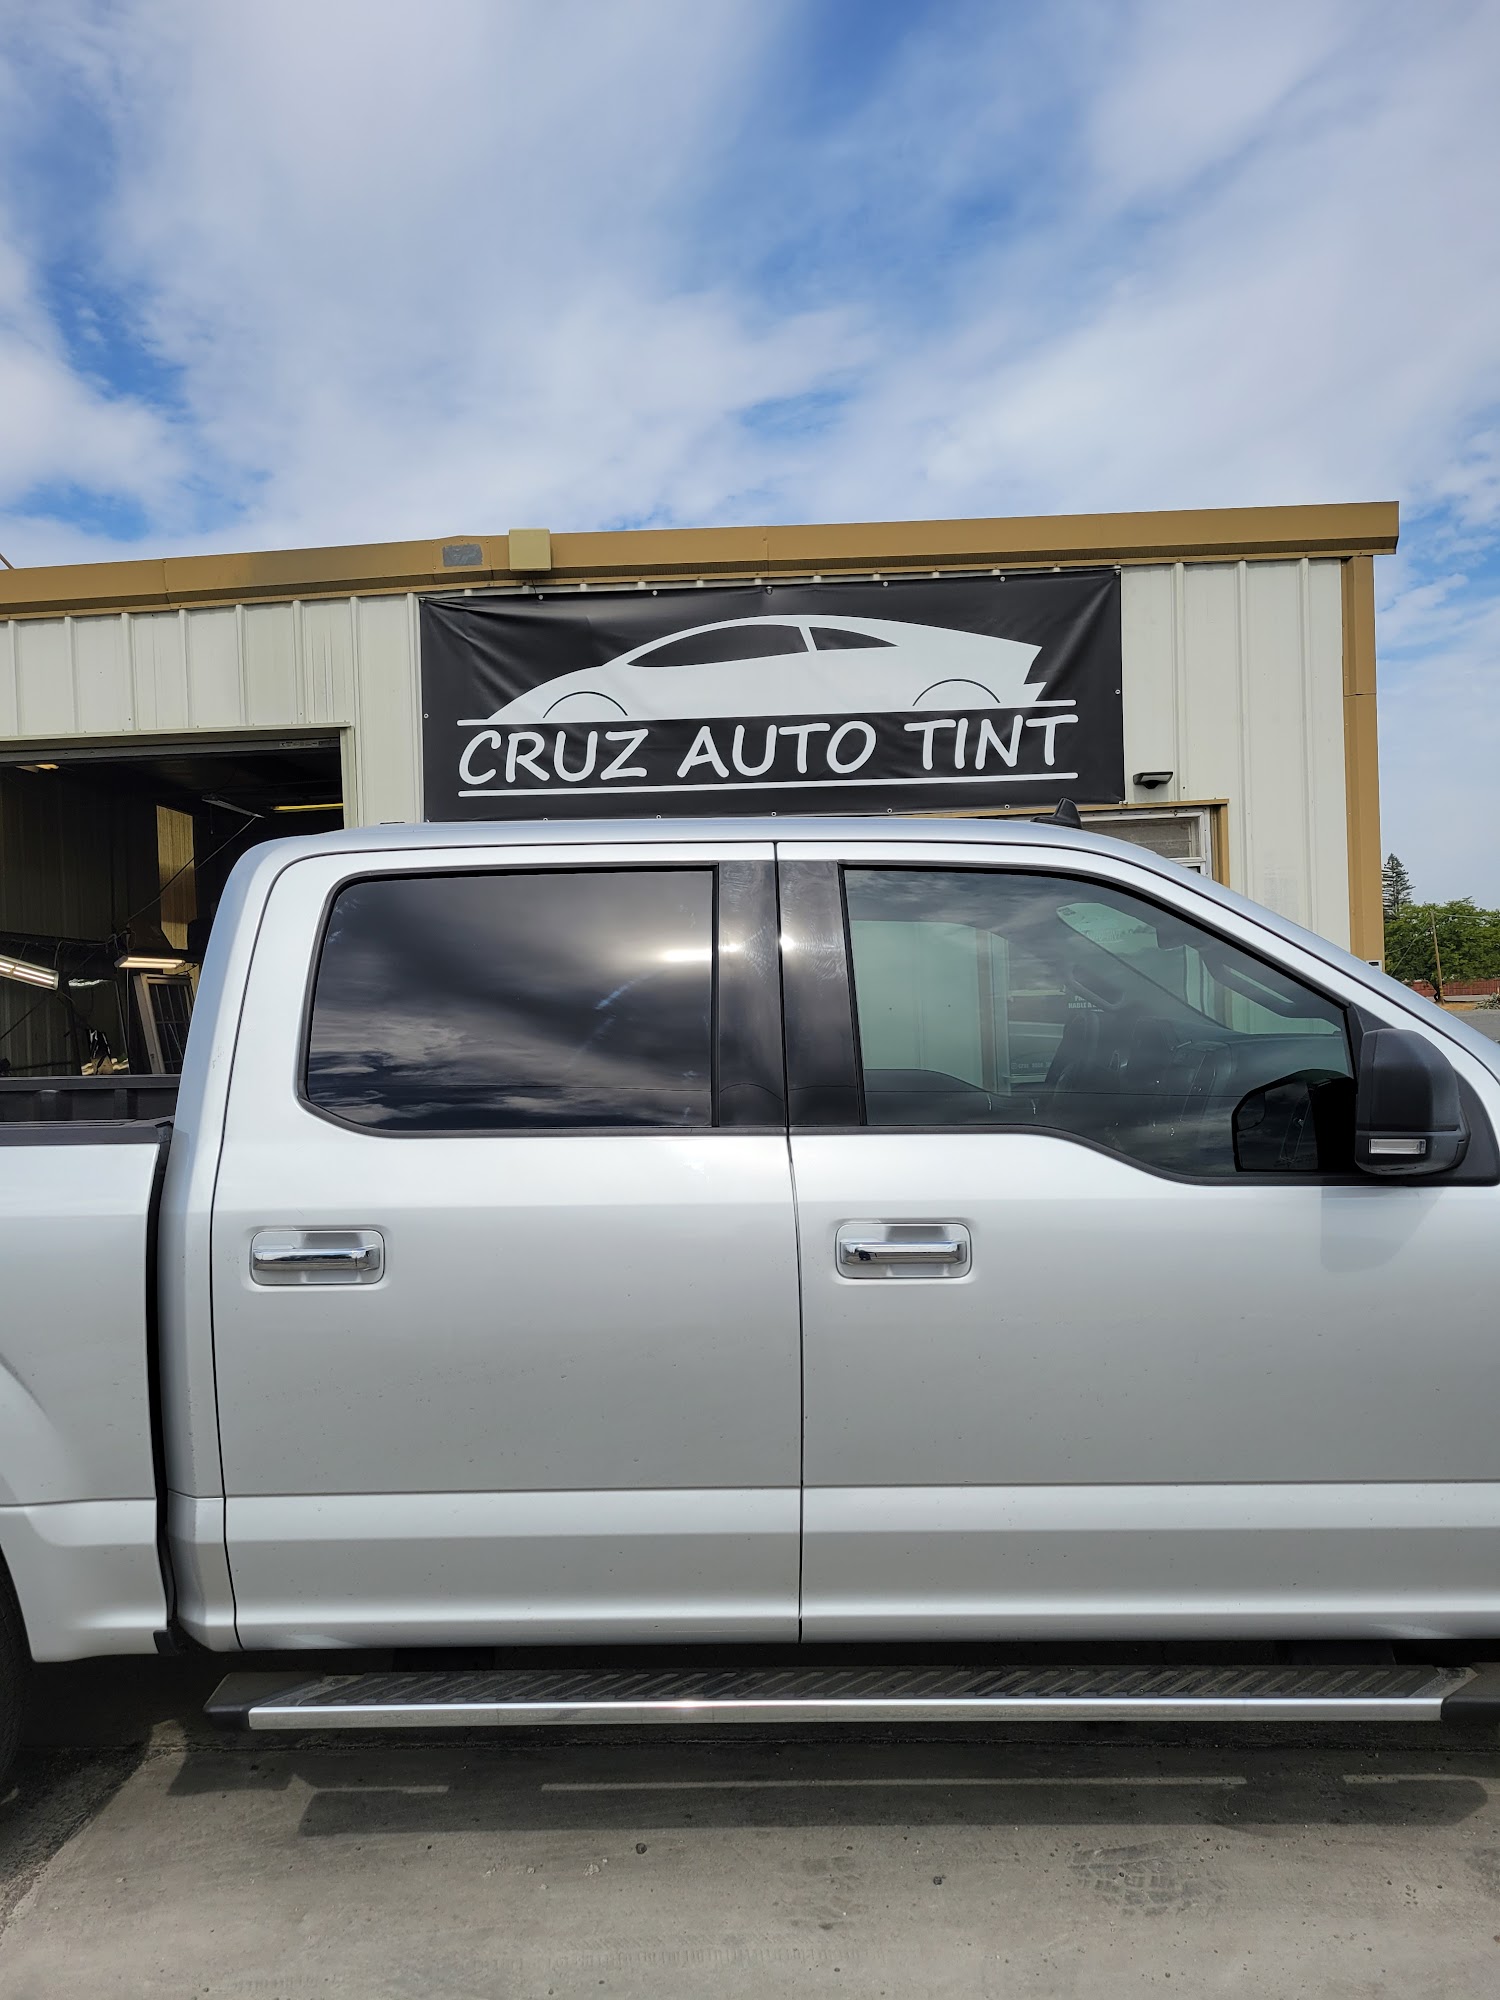 Cruz Auto Tint 514 South St, Orland California 95963